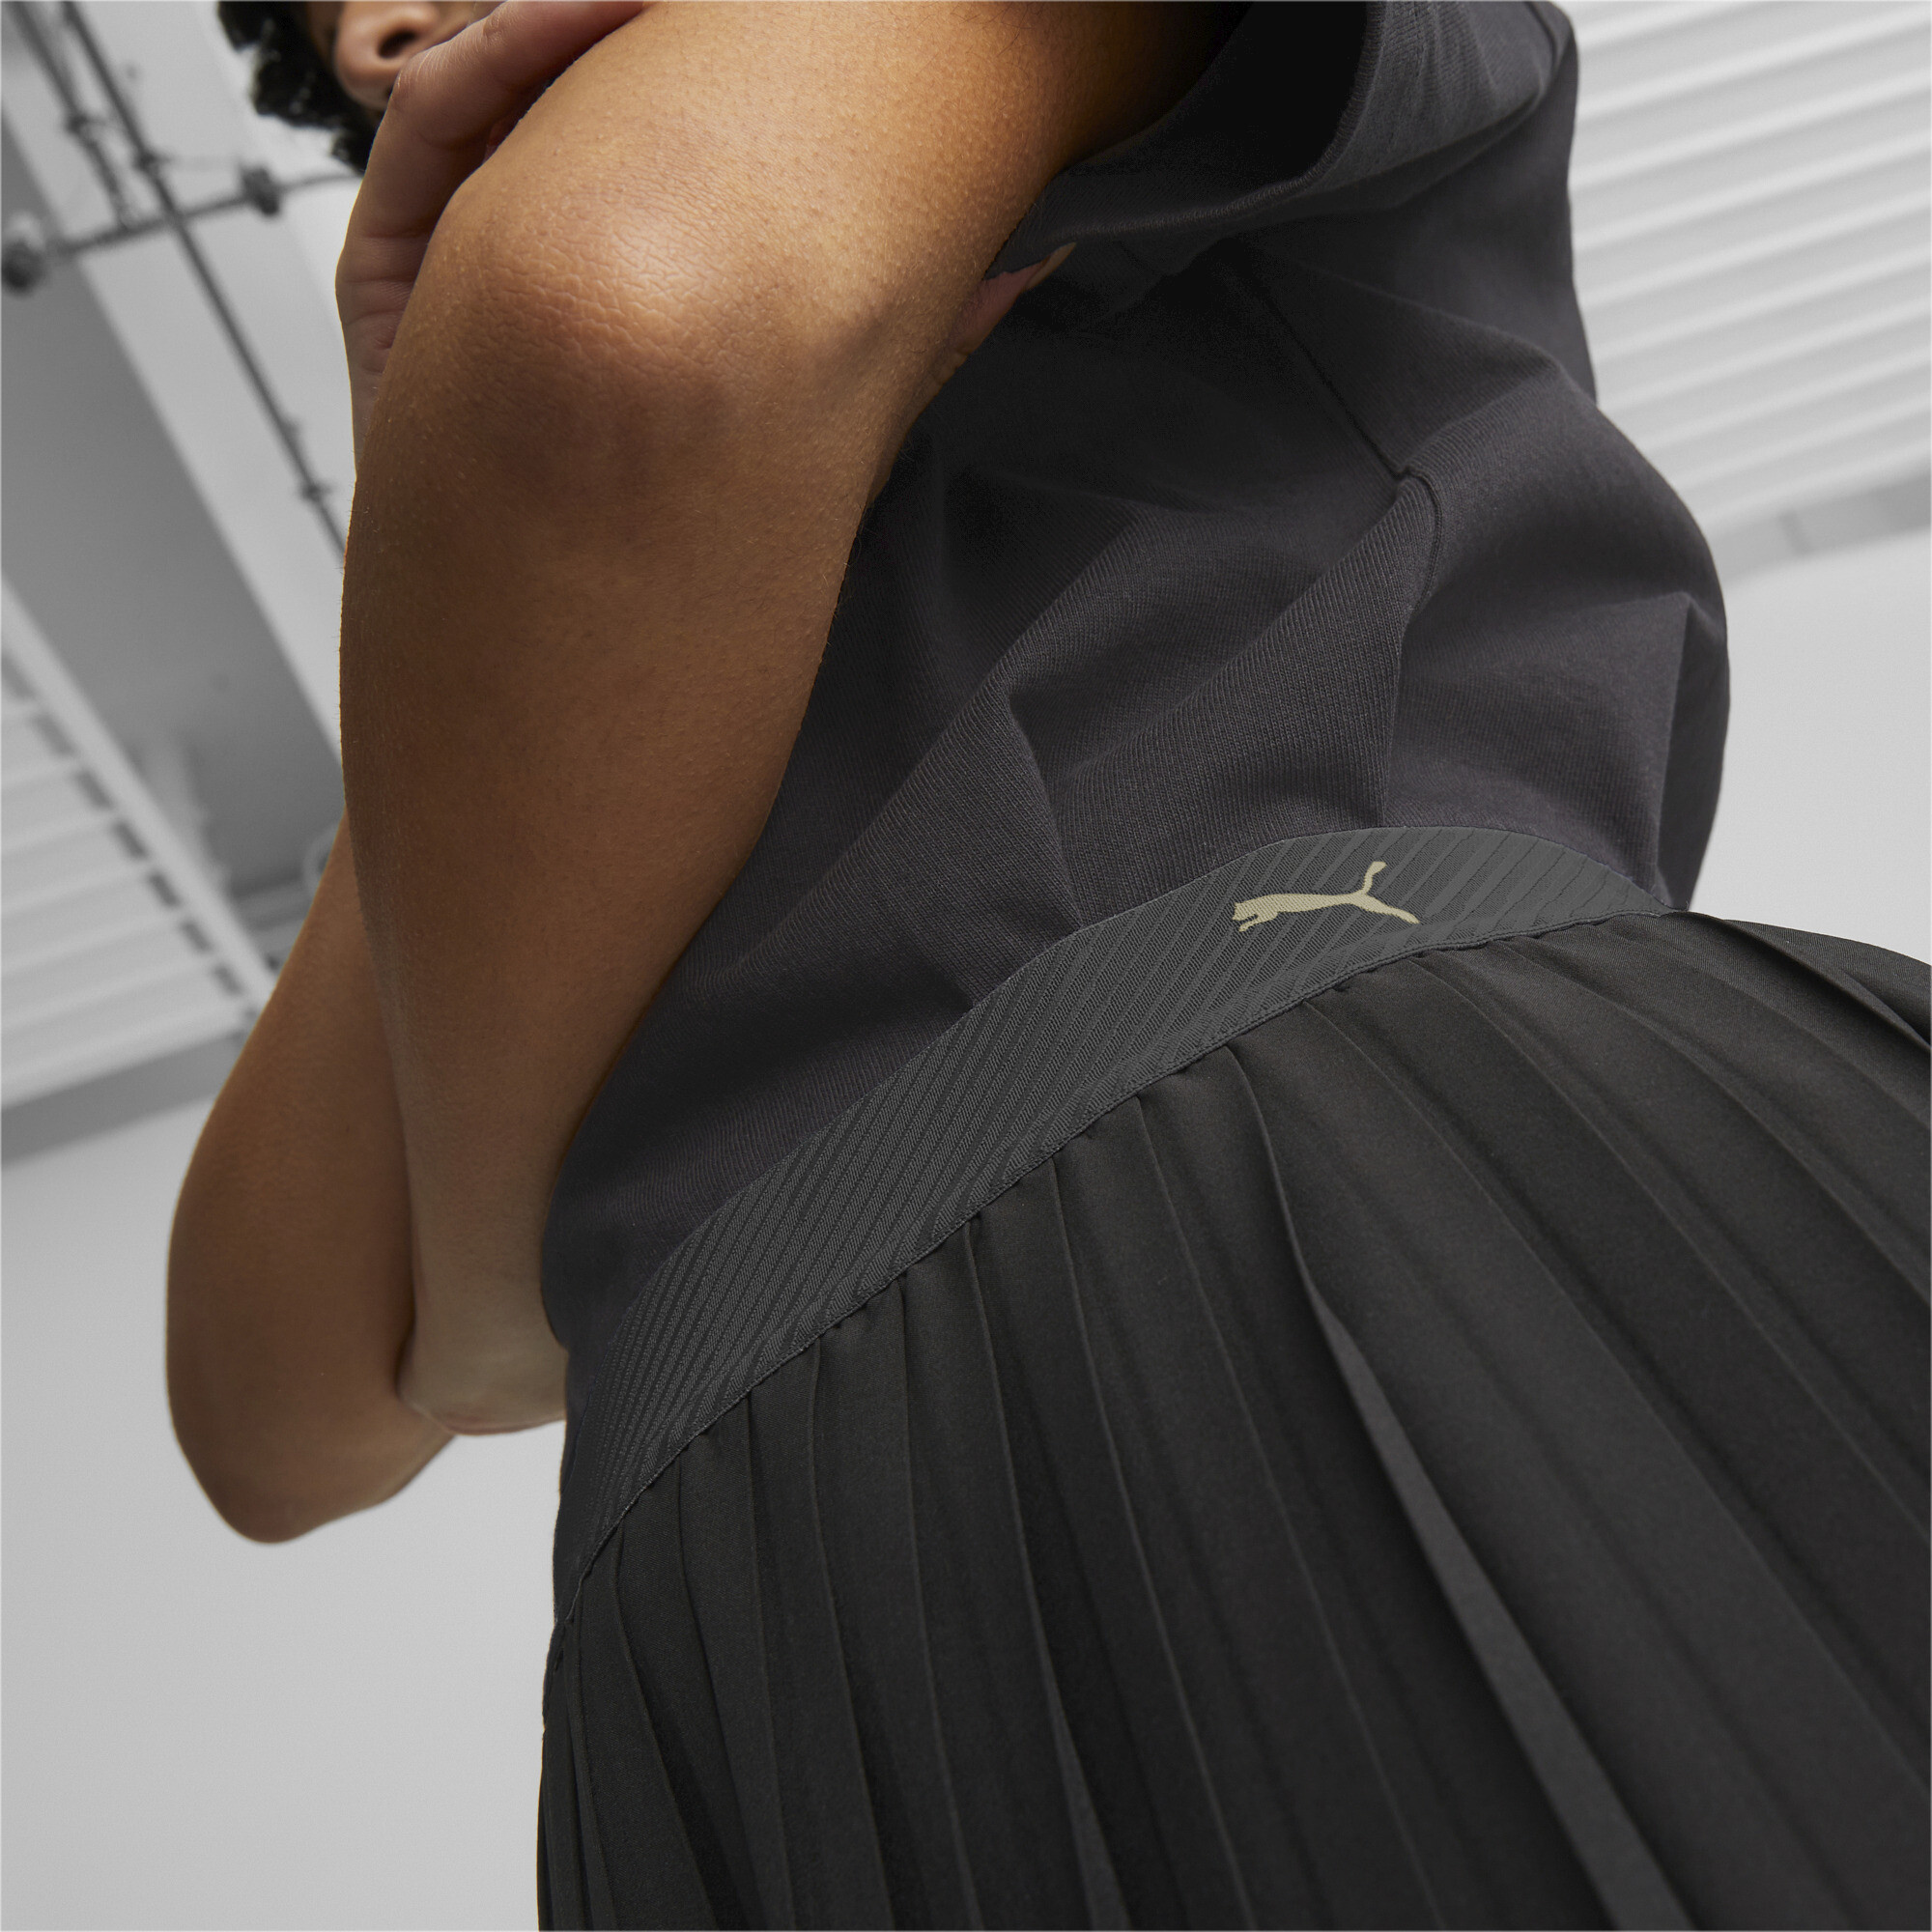 Women's PUMA SUNPÅ Plissee Skirt Women In Black, Size XS